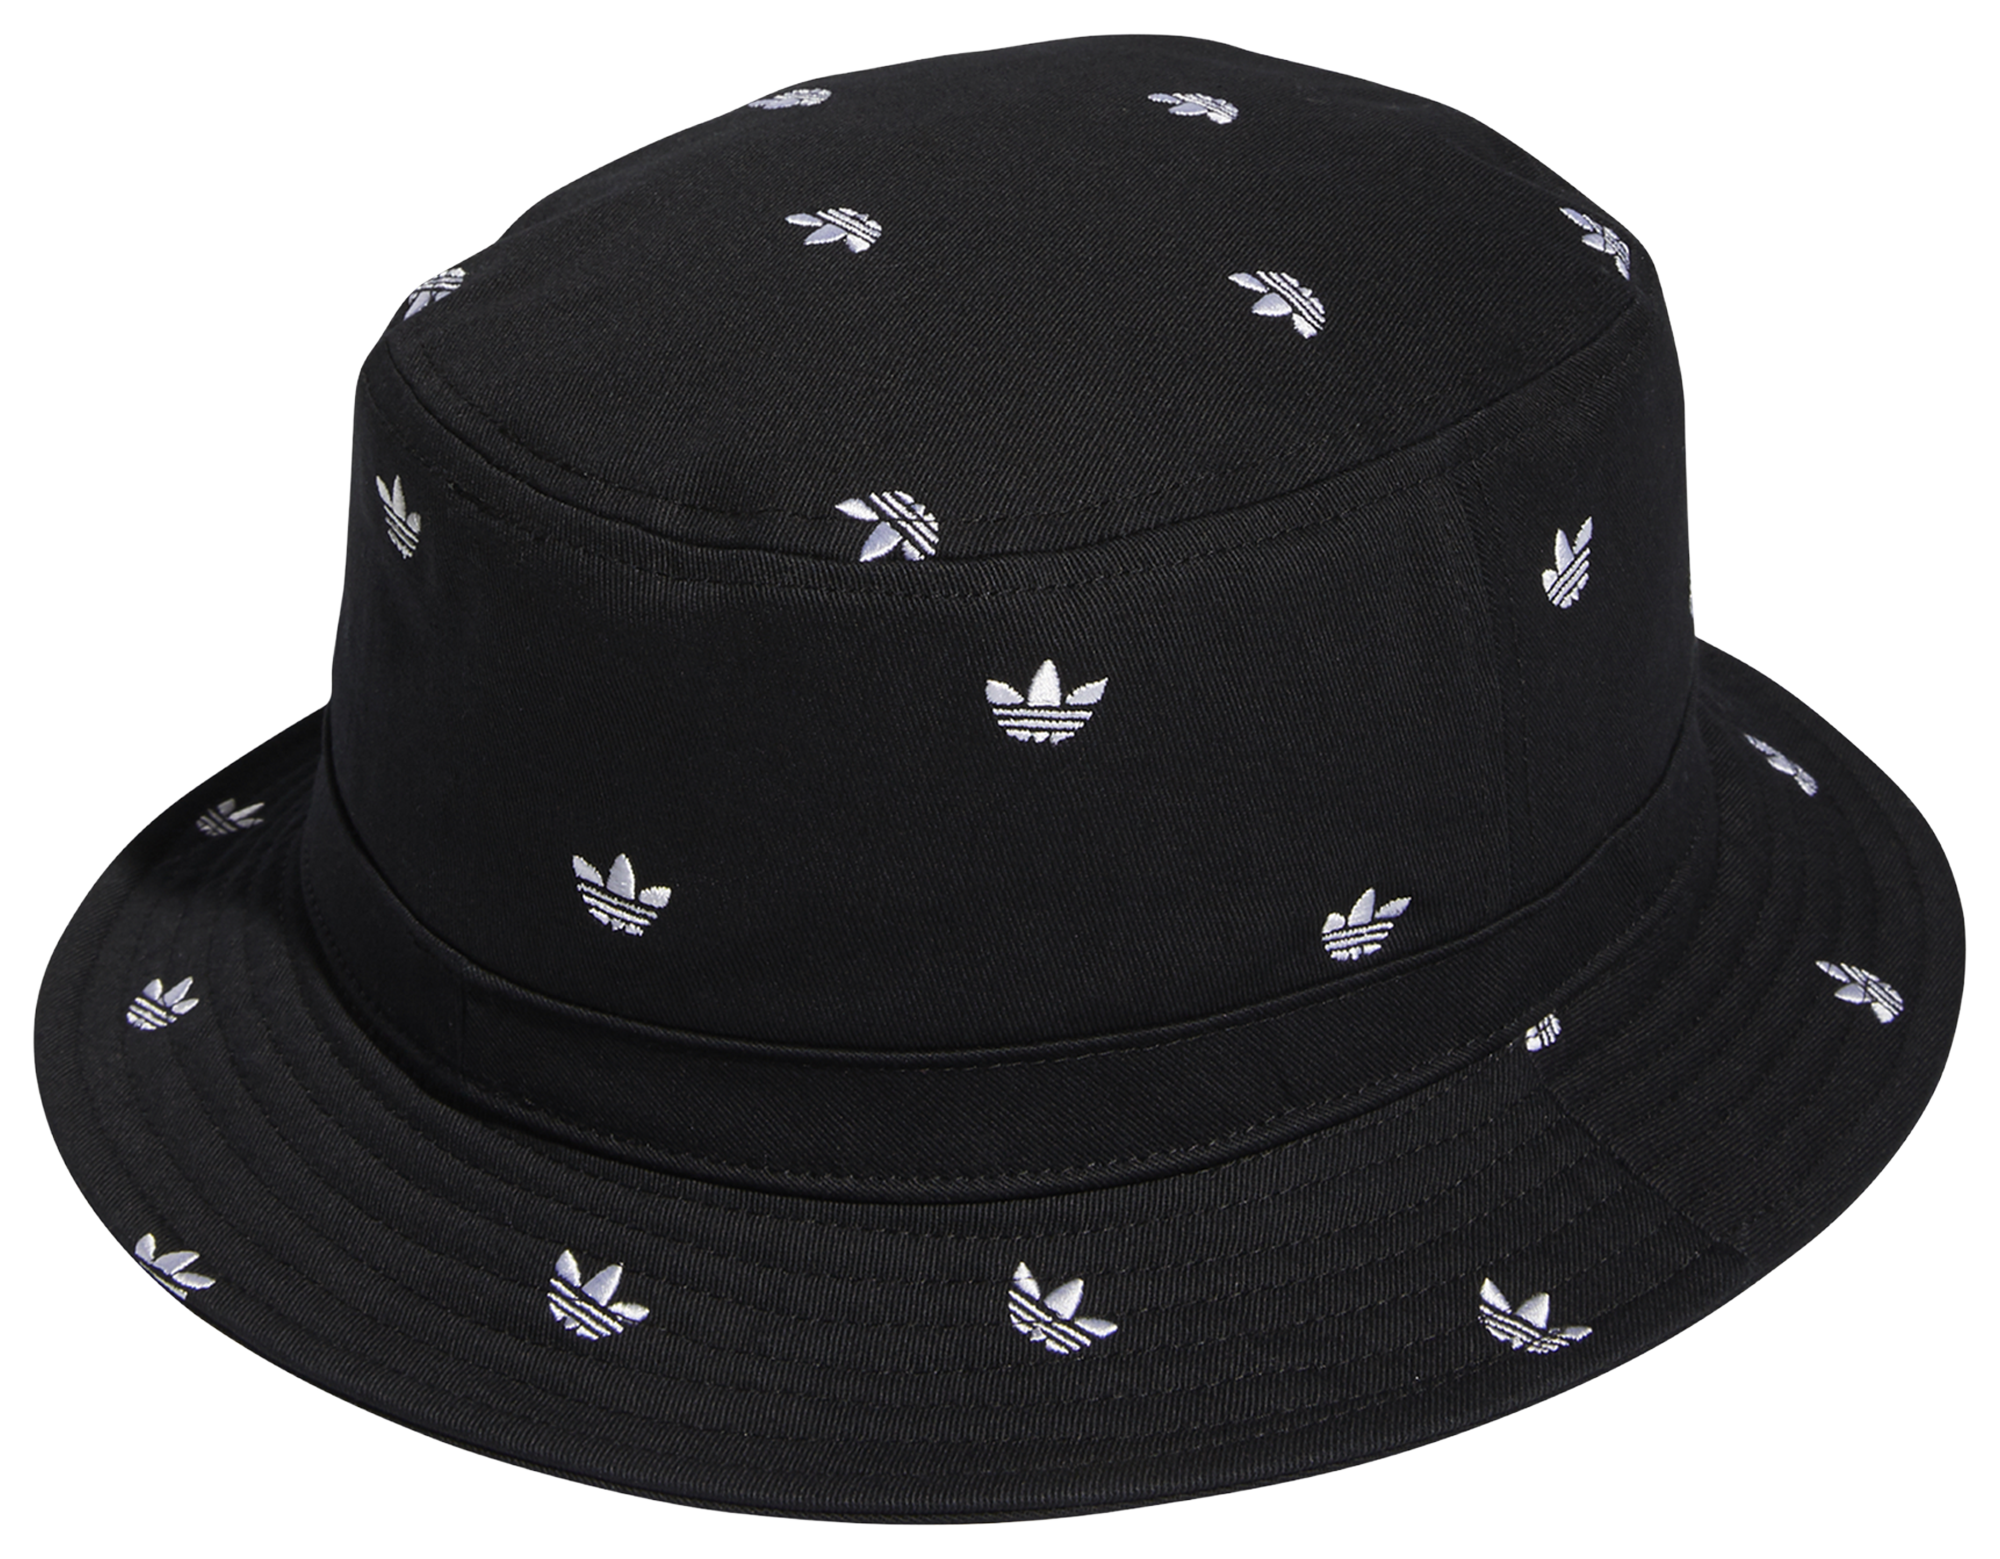 adidas Originals Trefoil Bucket Hat